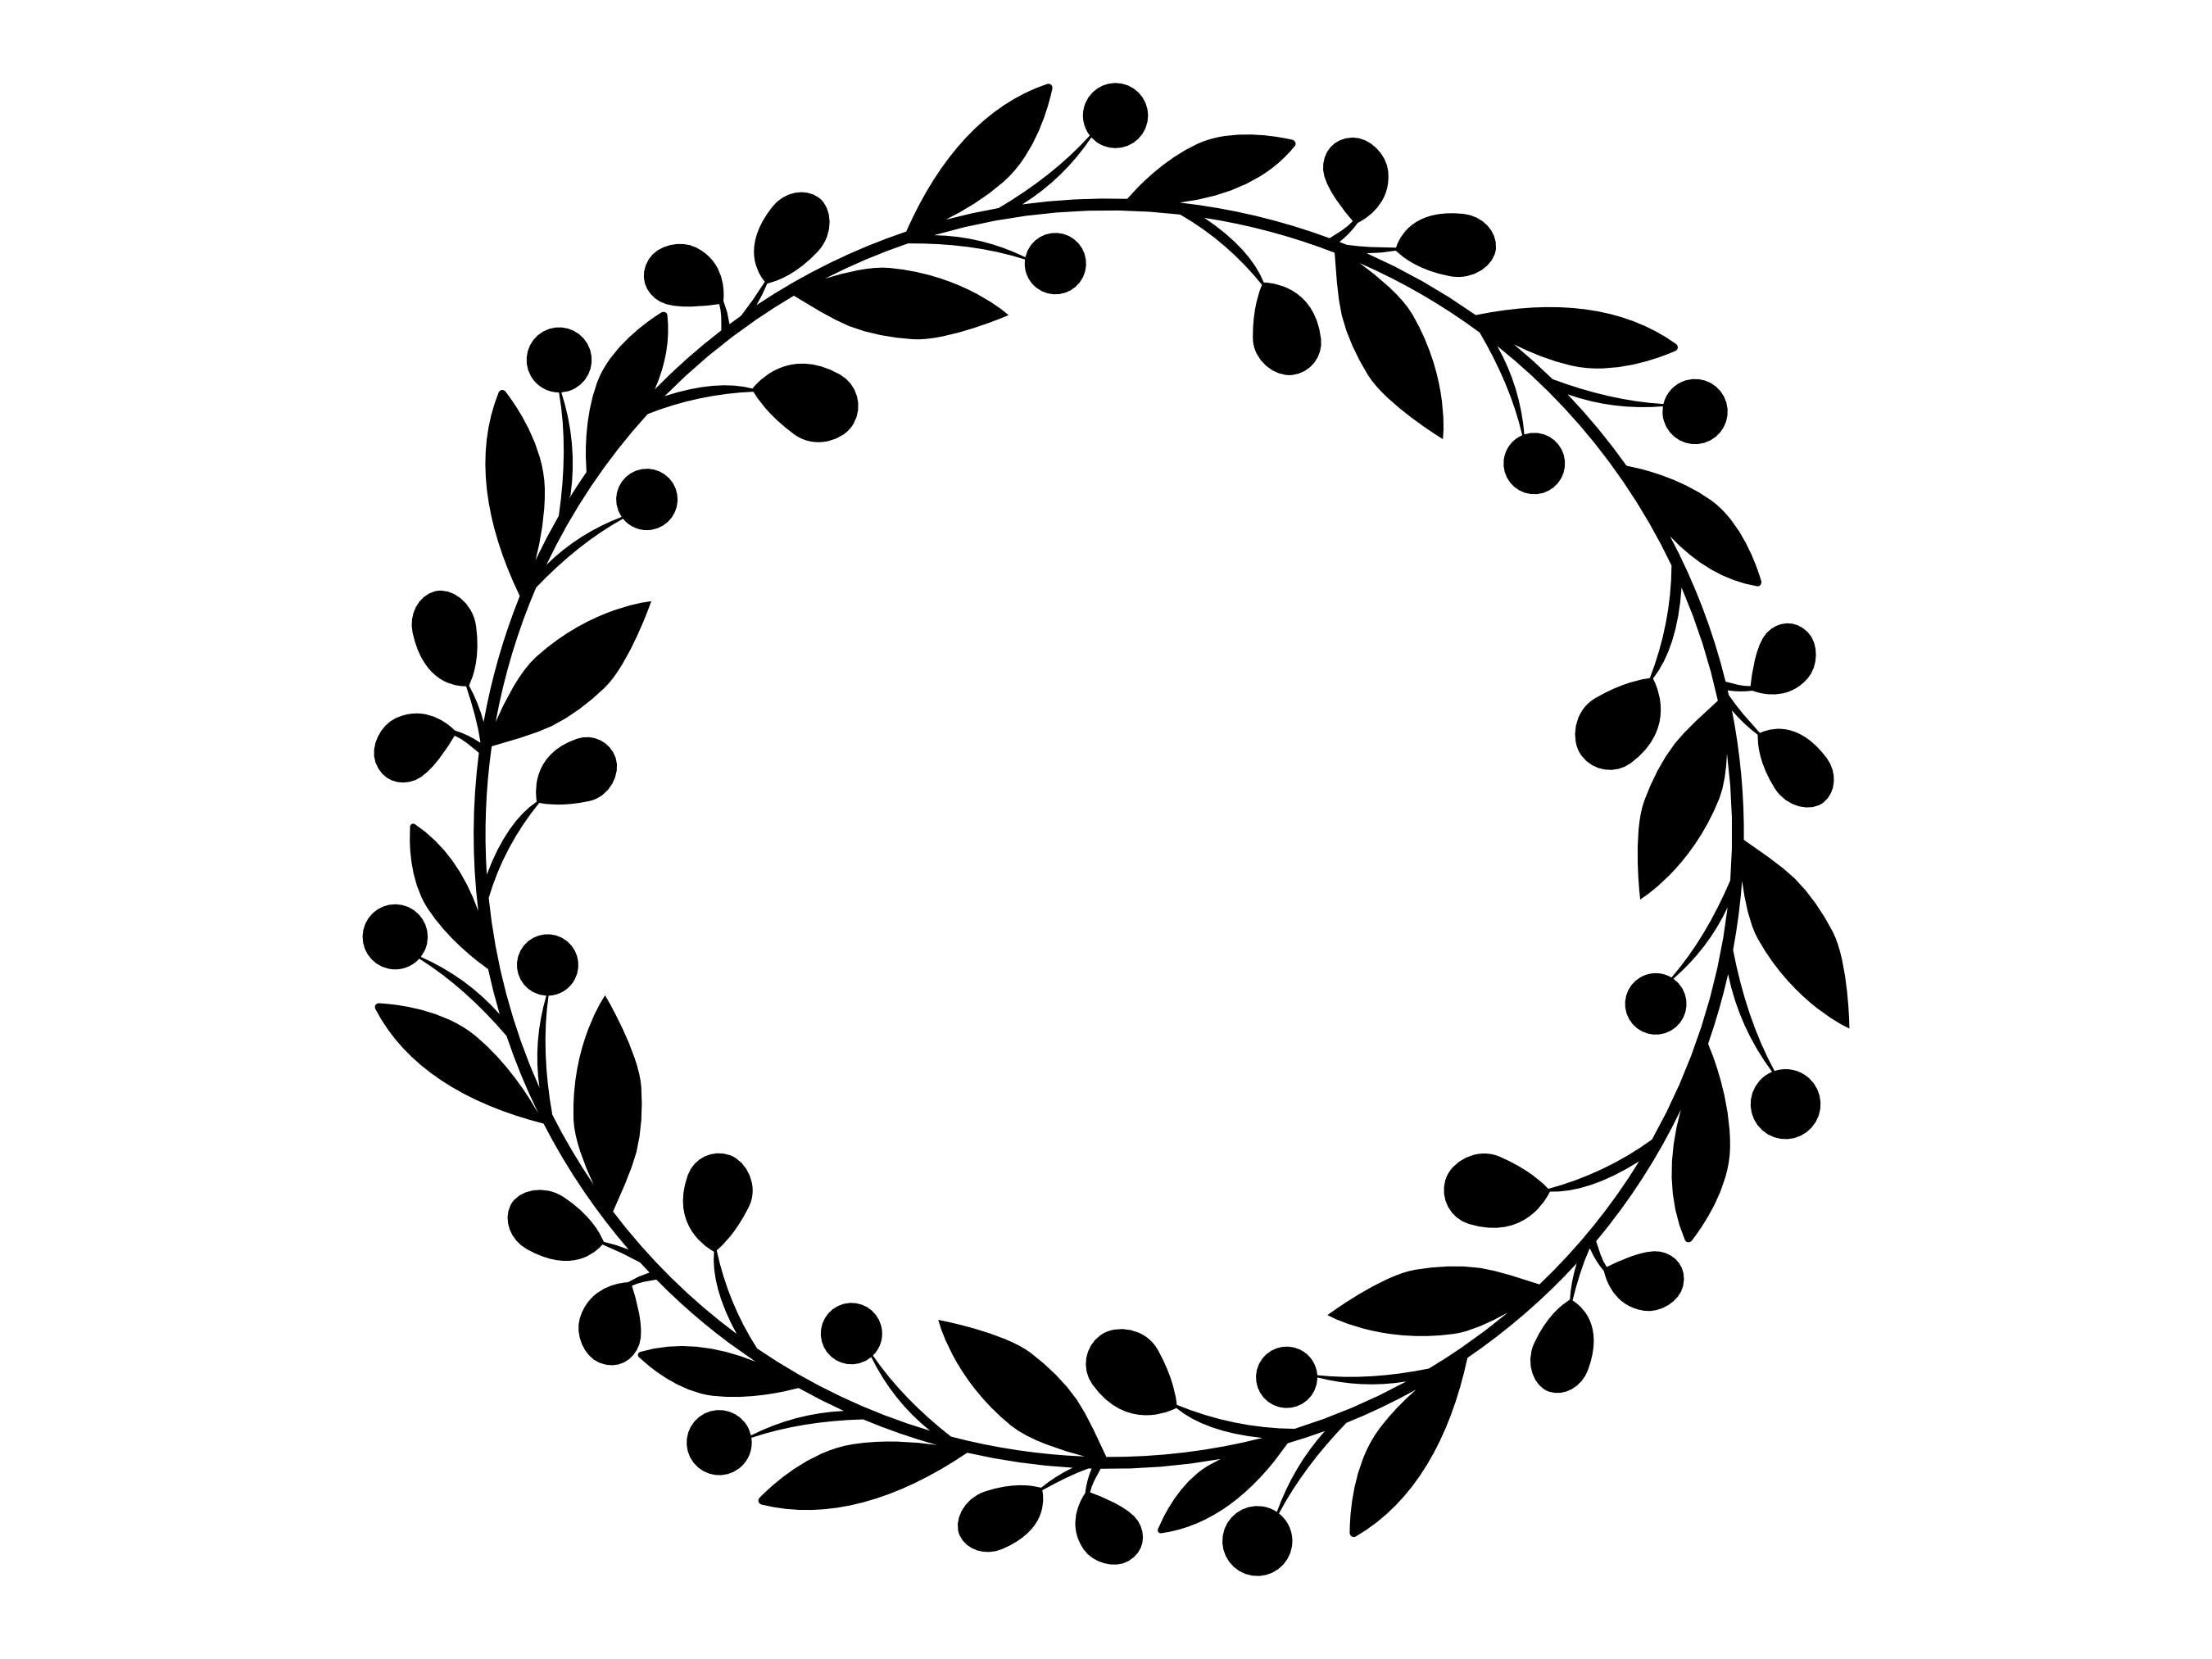 Decorative Floral Wreath SVG, Olive Wreath Silhouette, Leafy Wreath Clip Art, Wedding Wreath Cut File, Black and White Wreath SVG